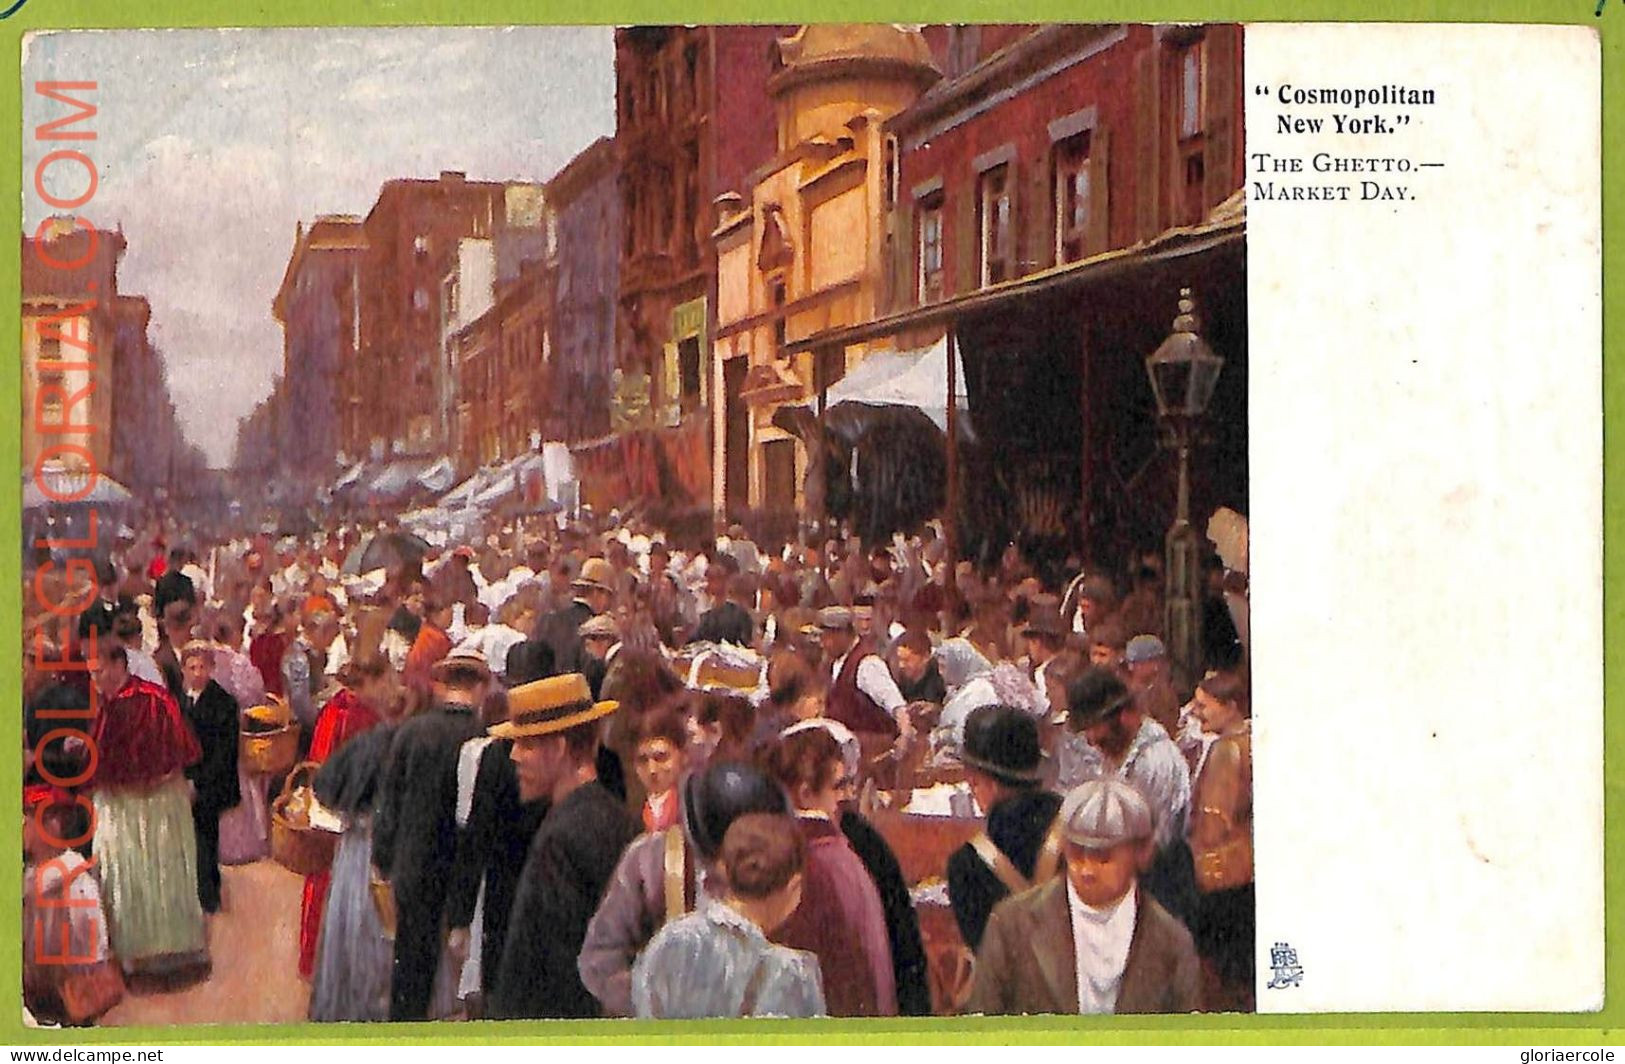 Af3578 - JUDAICA Vintage Postcard: USA - New York - The Ghetto - Market Day - Autres Monuments, édifices